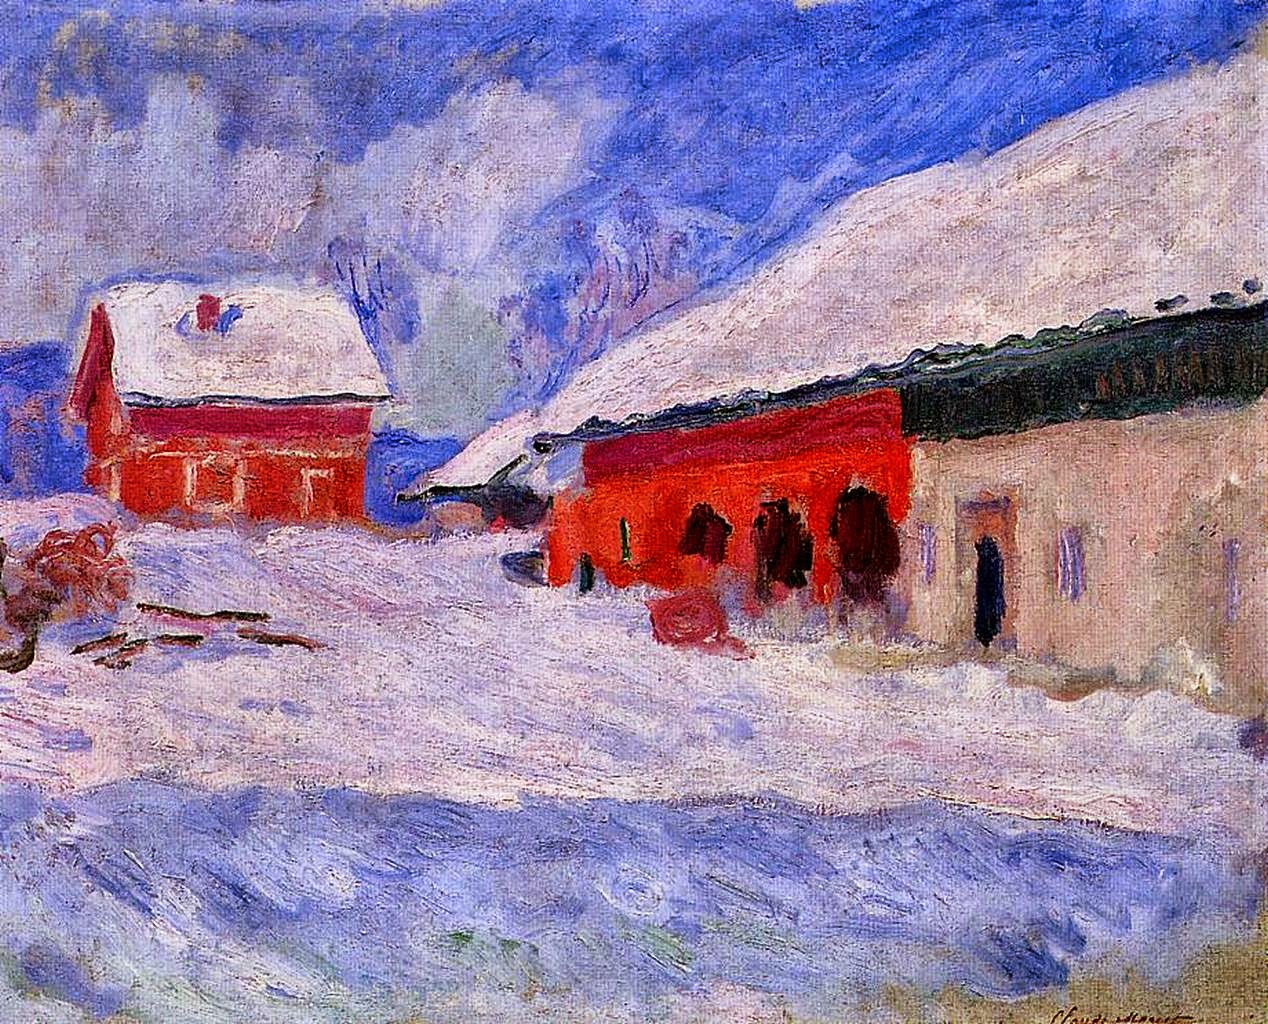 Claude+Monet-1840-1926 (44).jpg